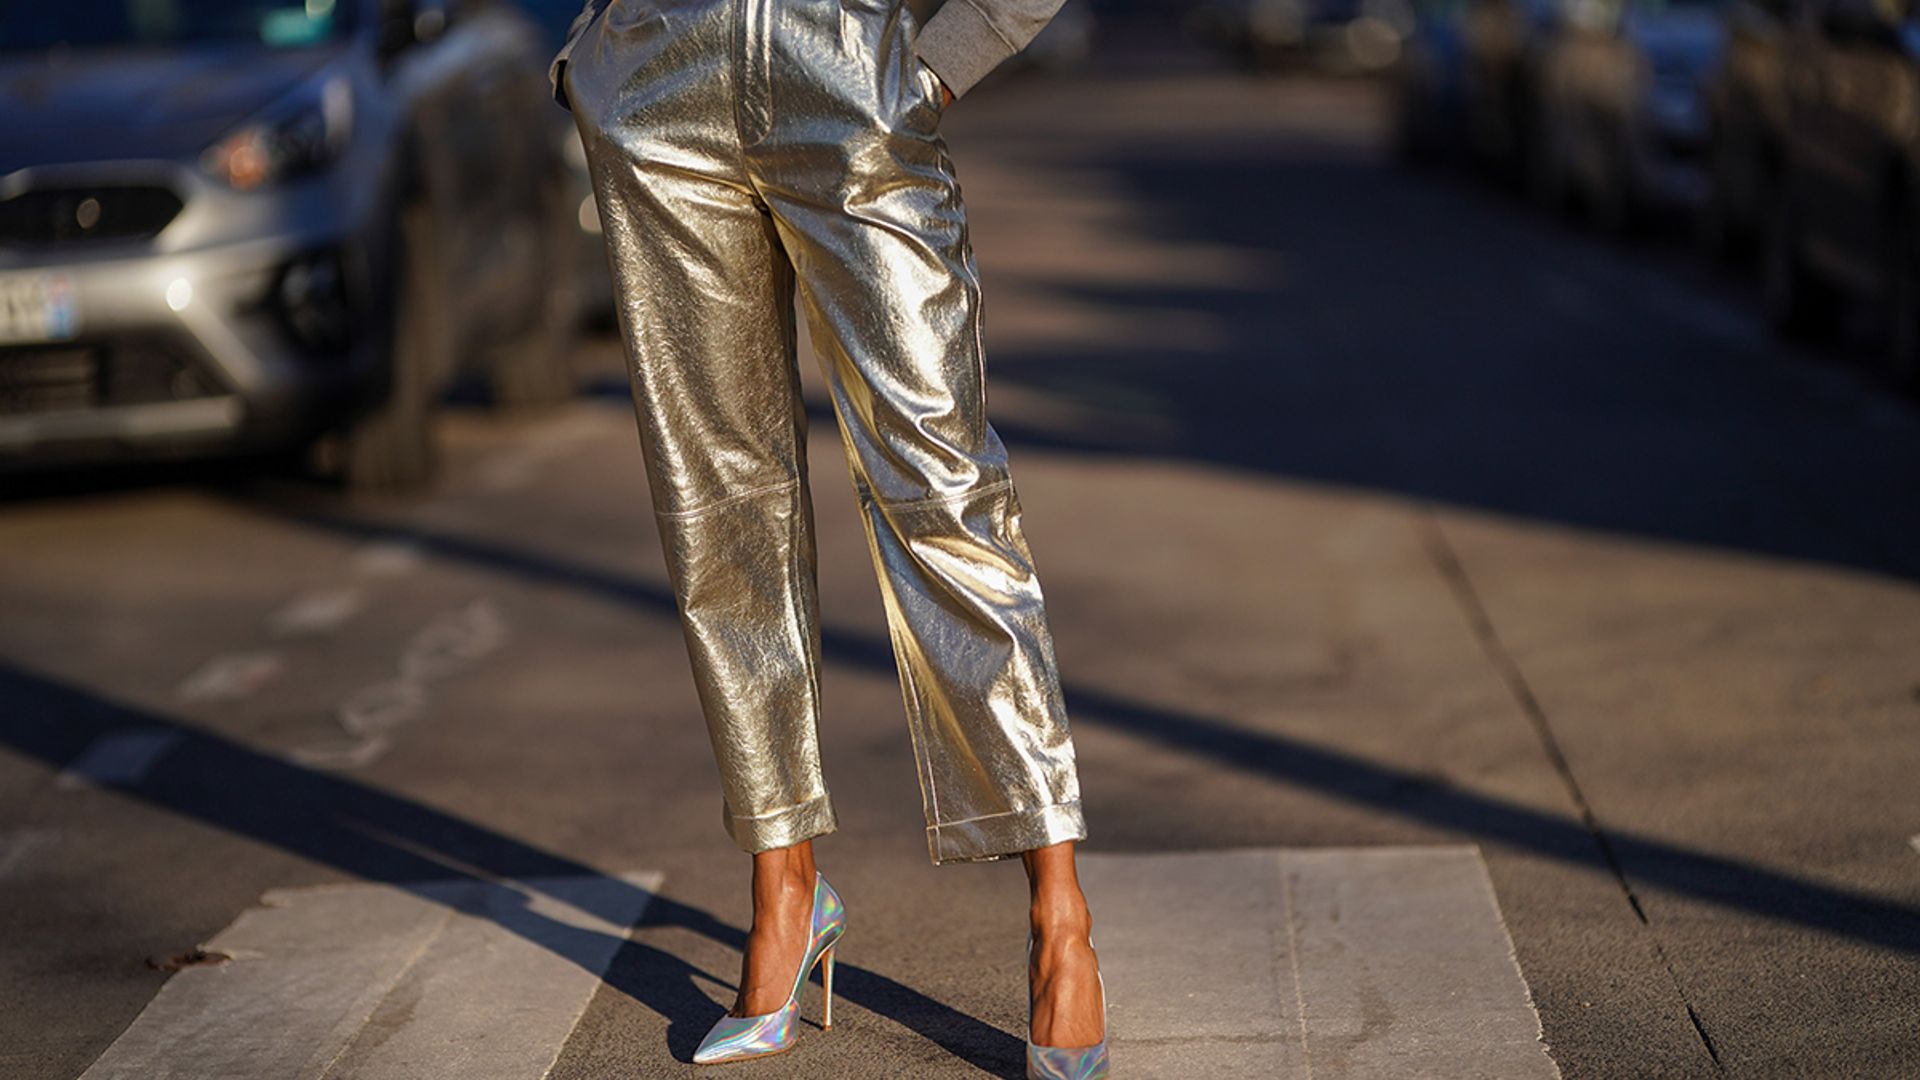 Silver trousers hot tend alert! 9 best silver trousers you've seen